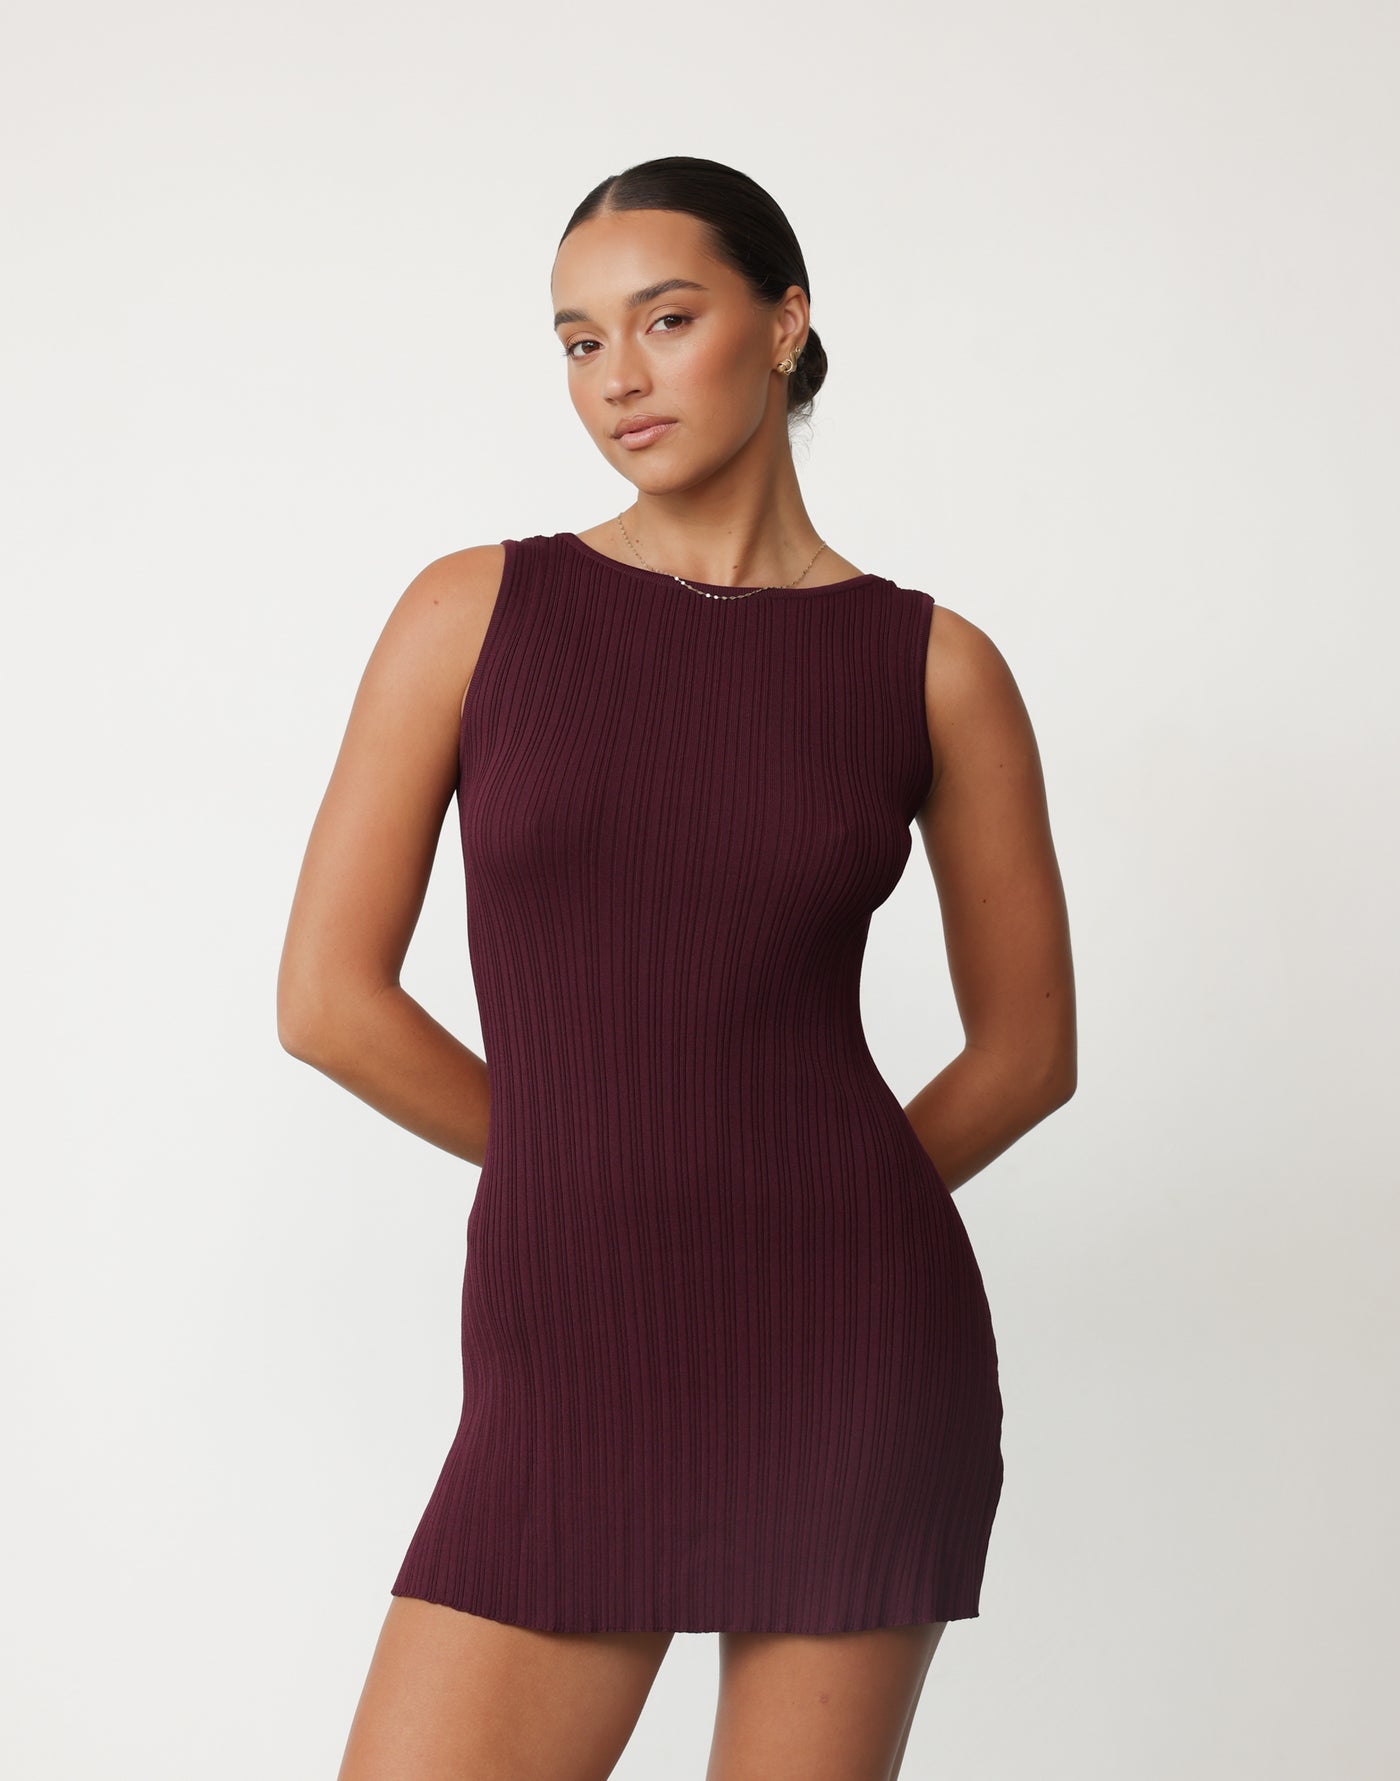 Aylah Mini Dress (Plum) - Backless Ribbed Detail Mini Dress - Women's Dress - Charcoal Clothing